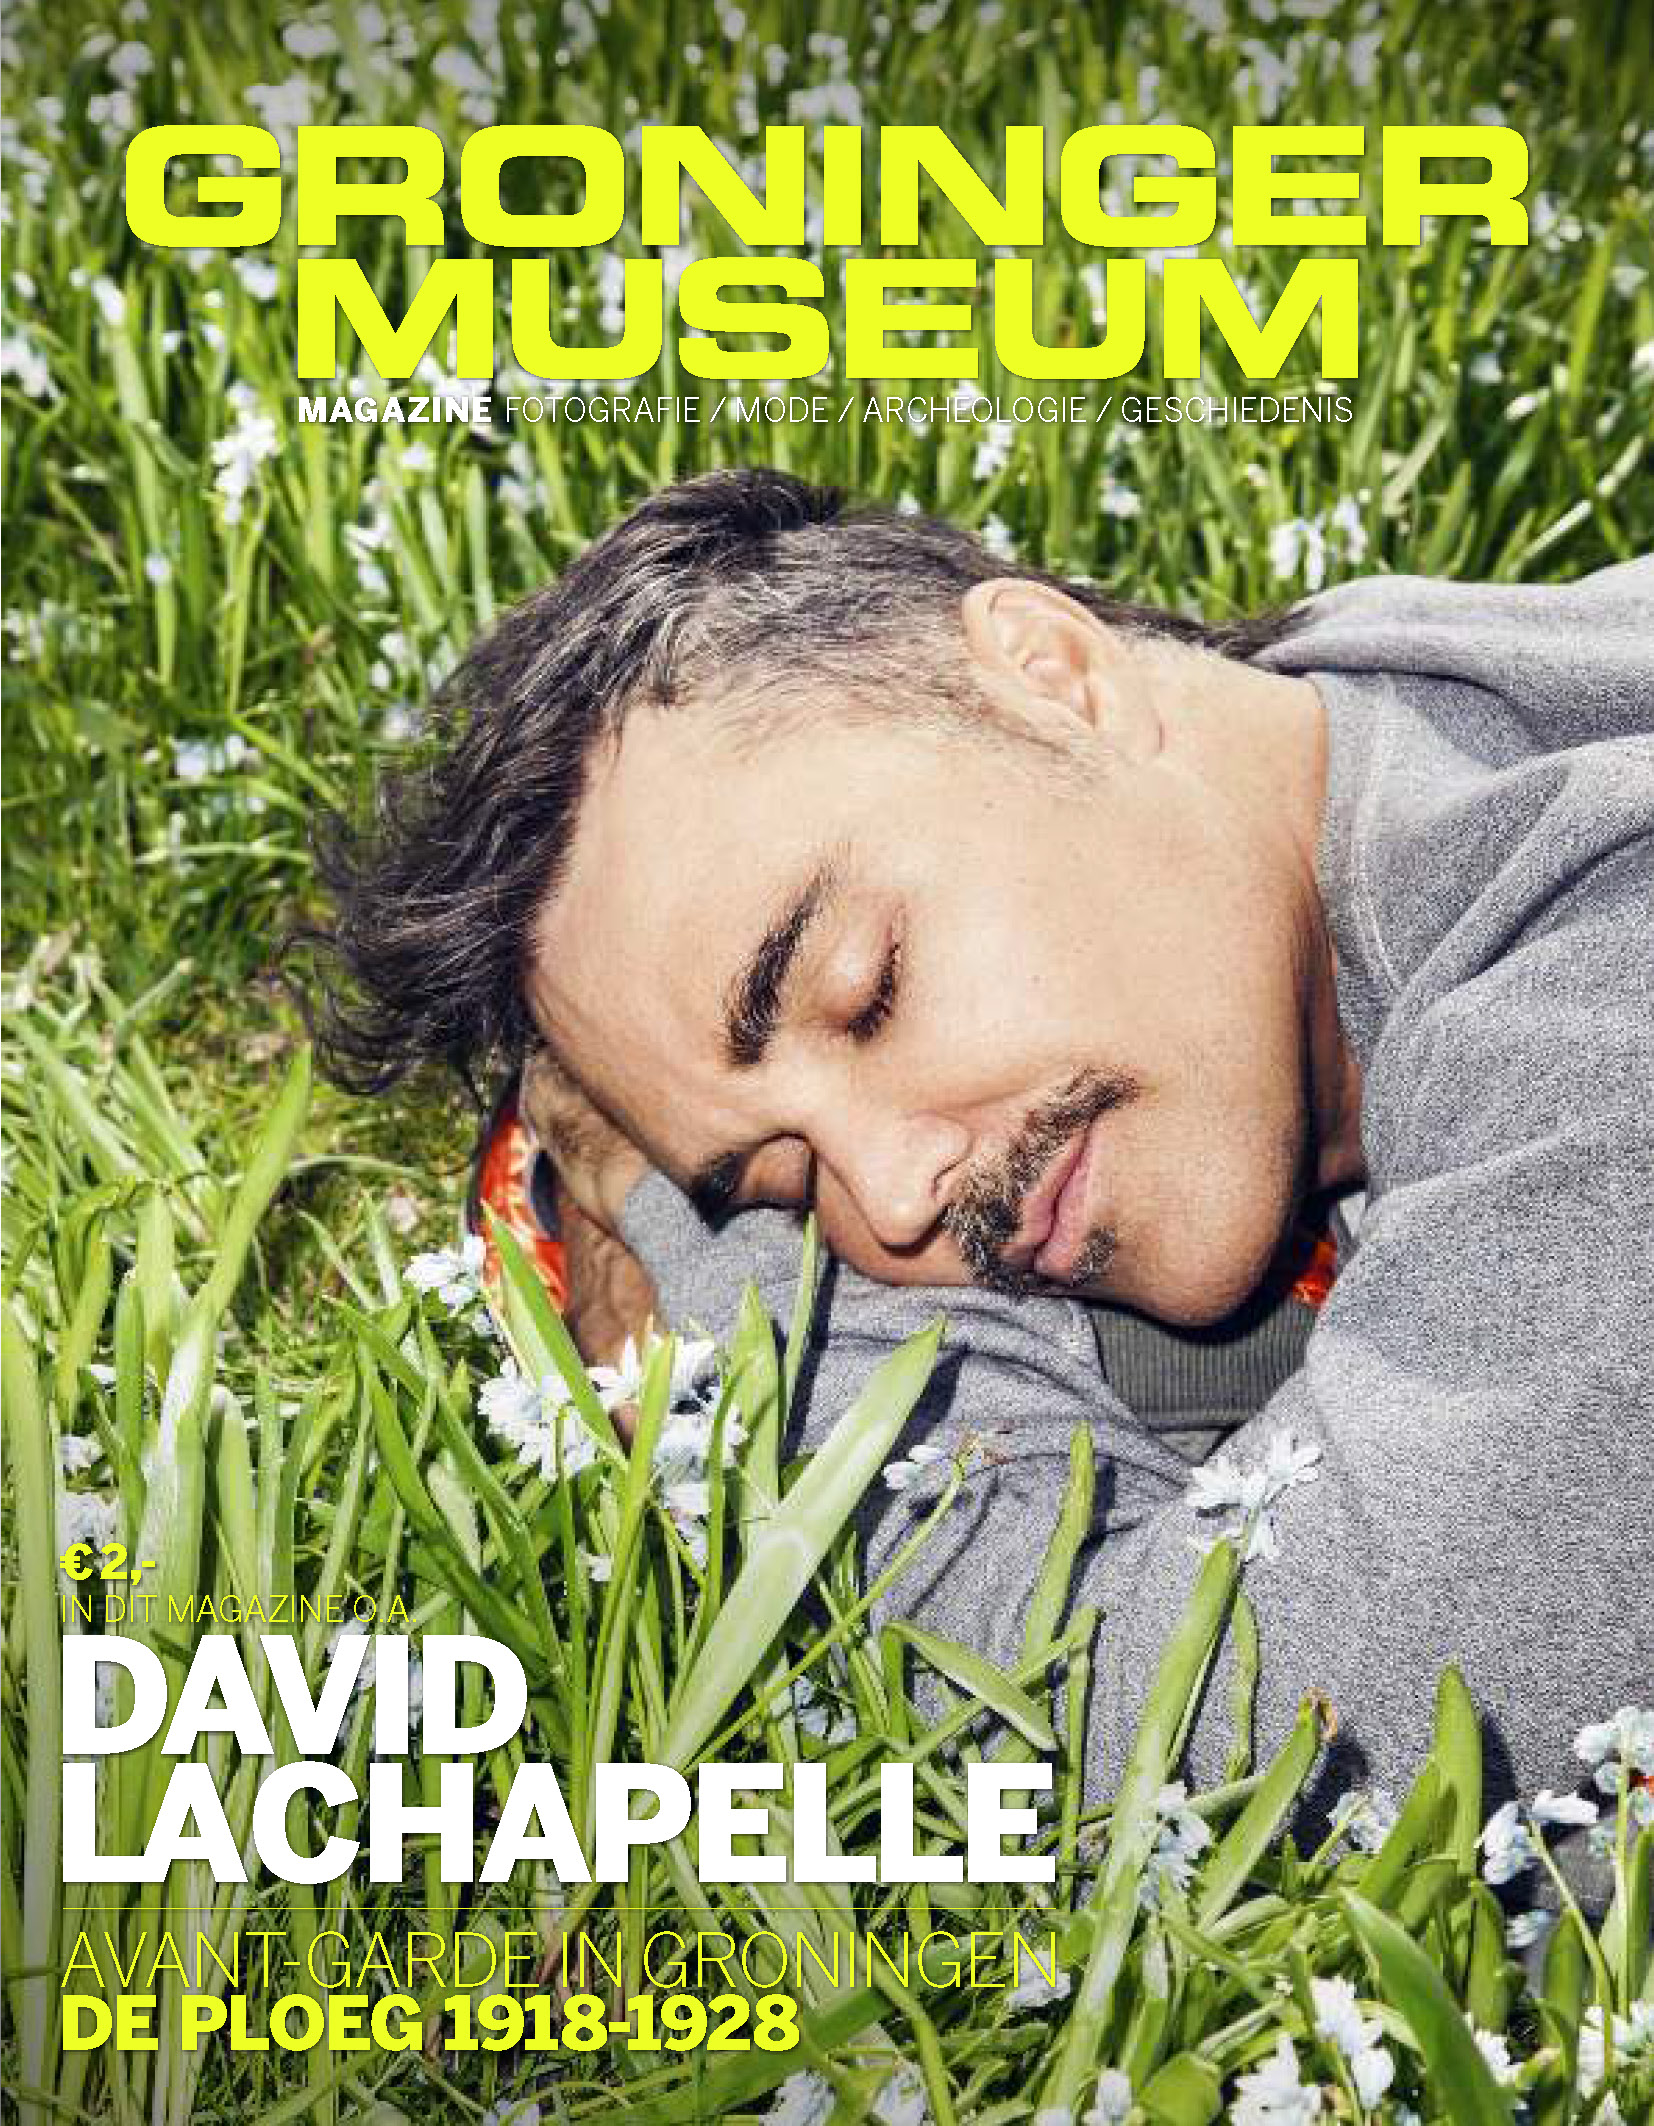 David LaChapelle | Groninger Museum, Groningen, The Netherlands, April 21 - October 28, 2018 | Selected press: Groninger Museum | 74